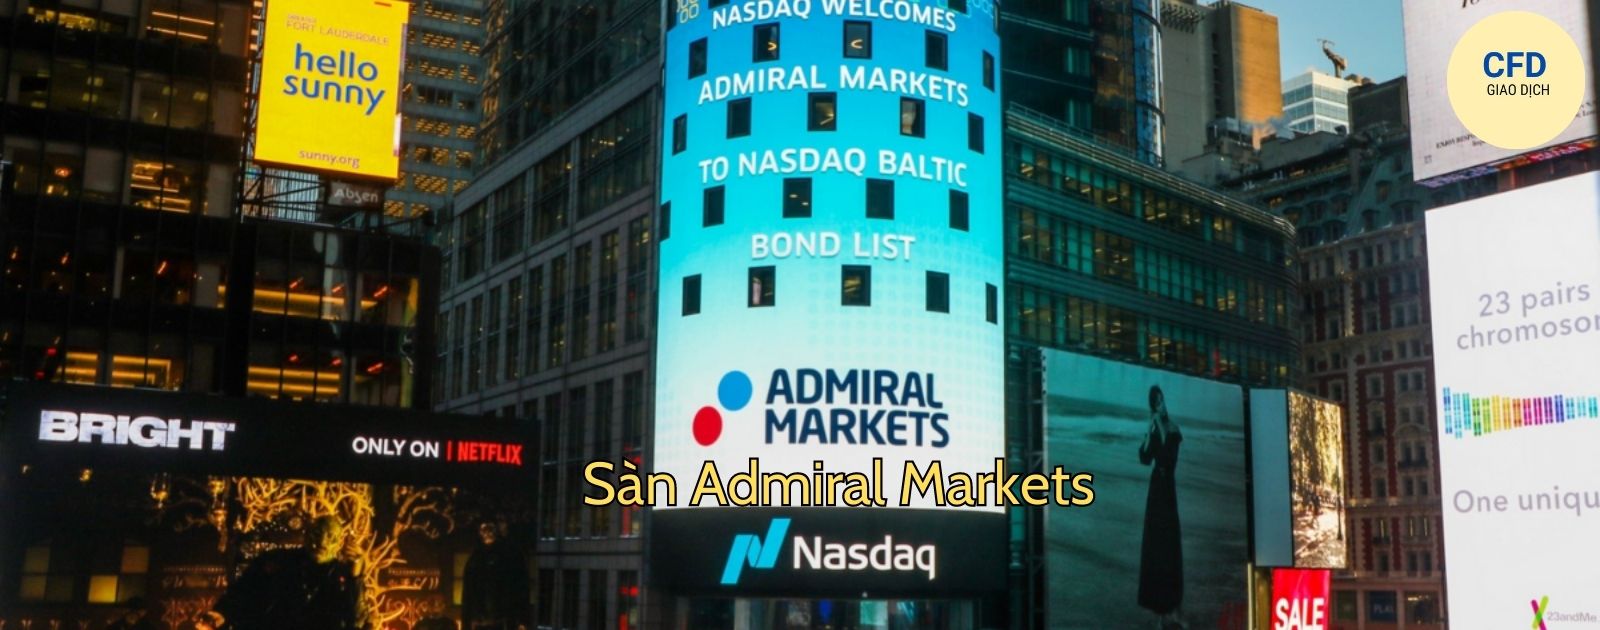 sàn Admiral Markets